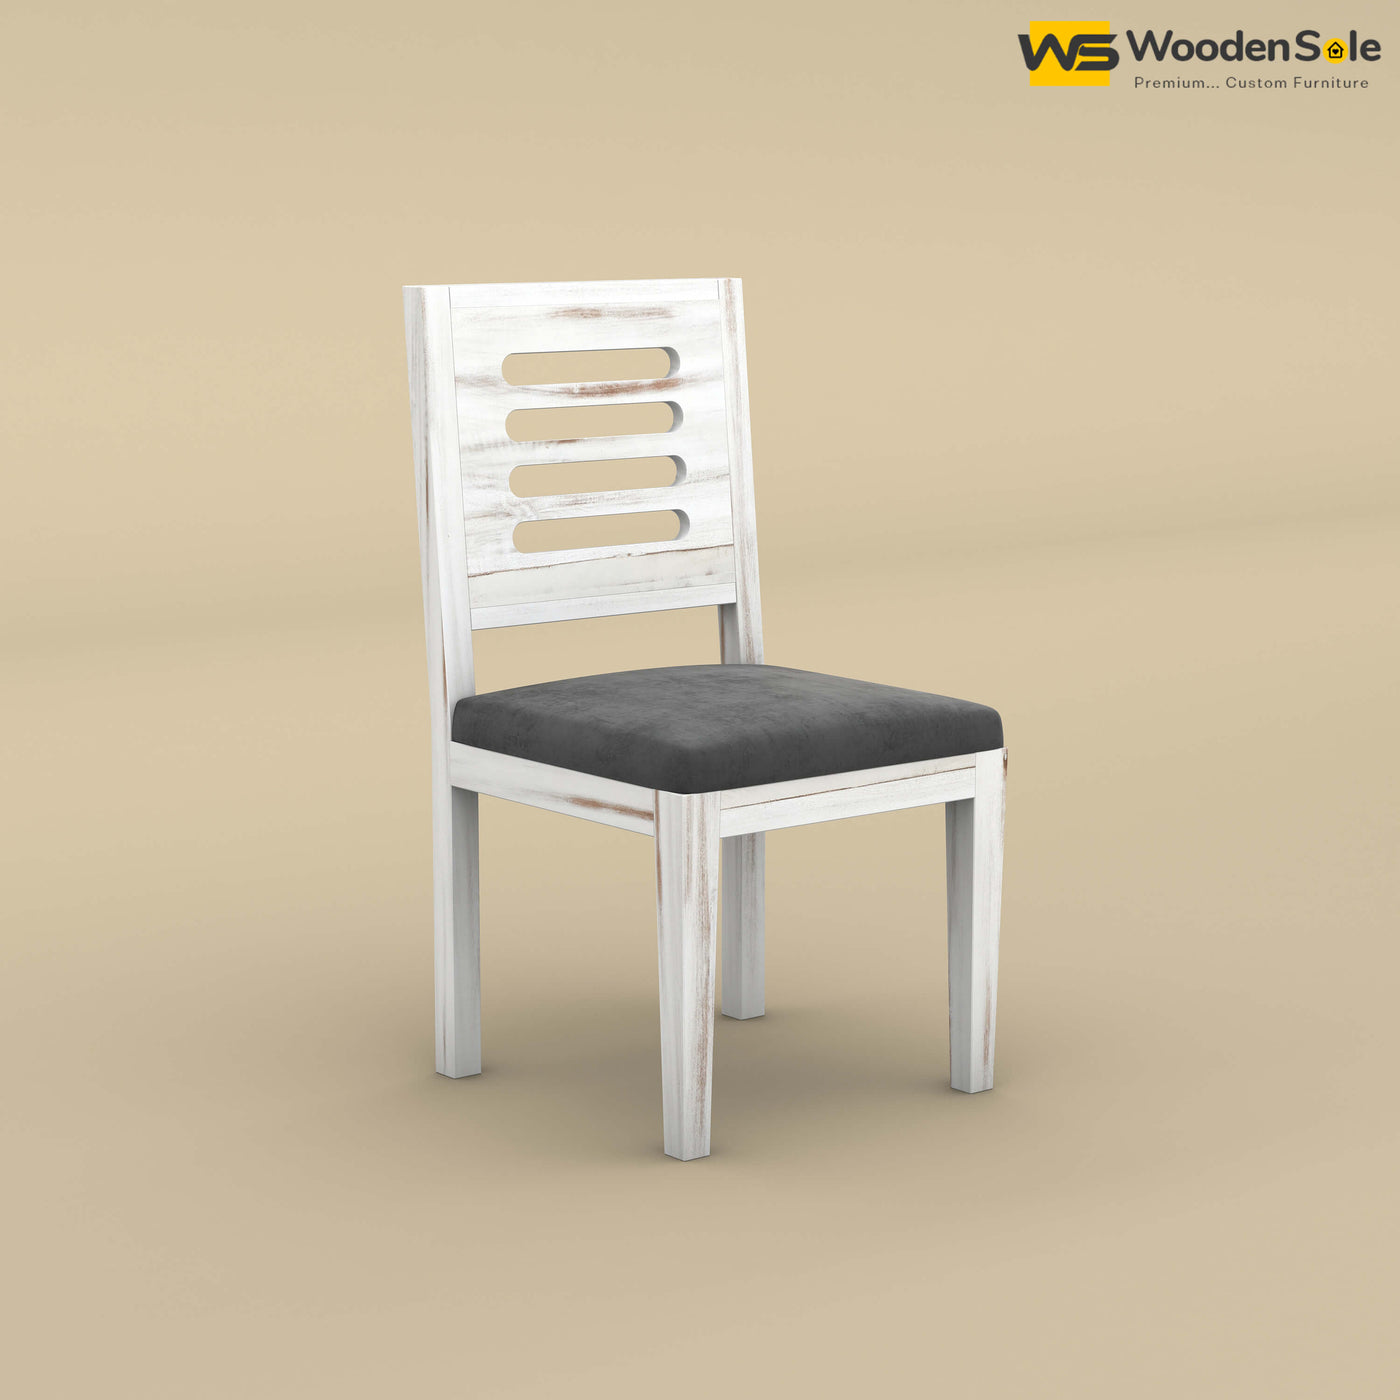 Sheesham Wood Dining Chair with Cushion (Distress Finish)